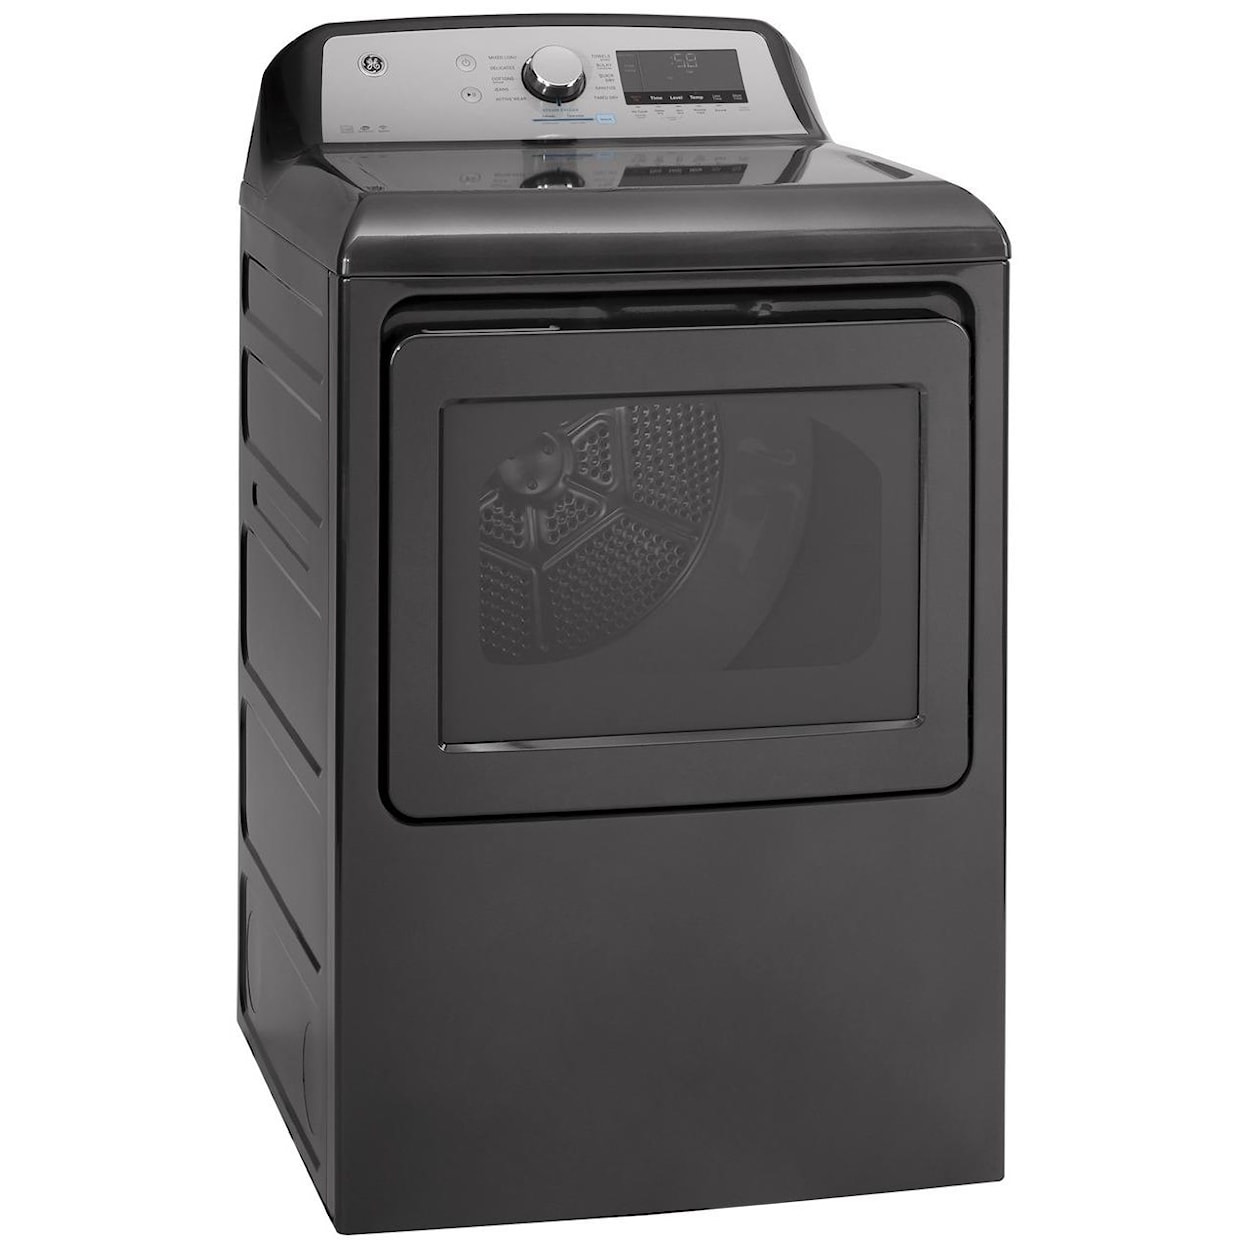 GE Appliances GE Electric Dryers 7.4 cf Capacity Smart Electric Dryer